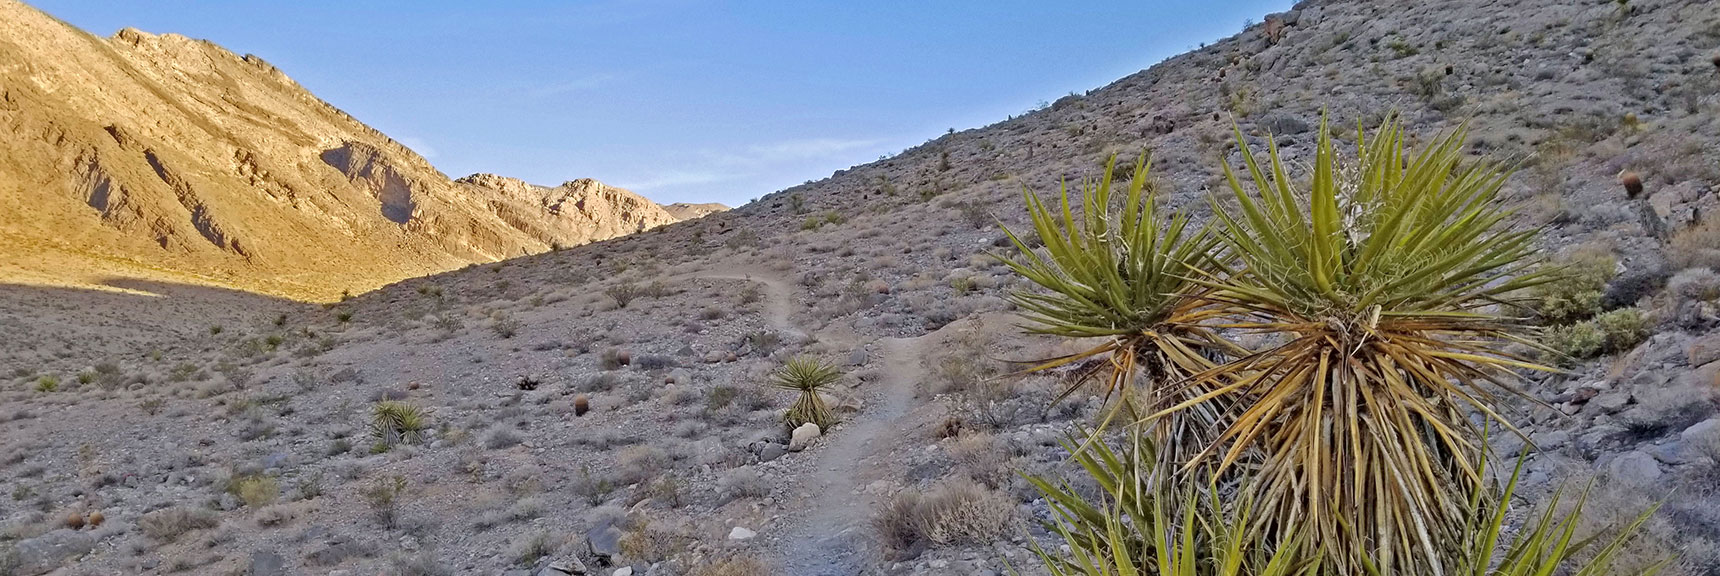 Toove Trail on the Western Side of Cheyenne Mt, Heading North | Cheyenne Mountain | Las Vegas, Nevada